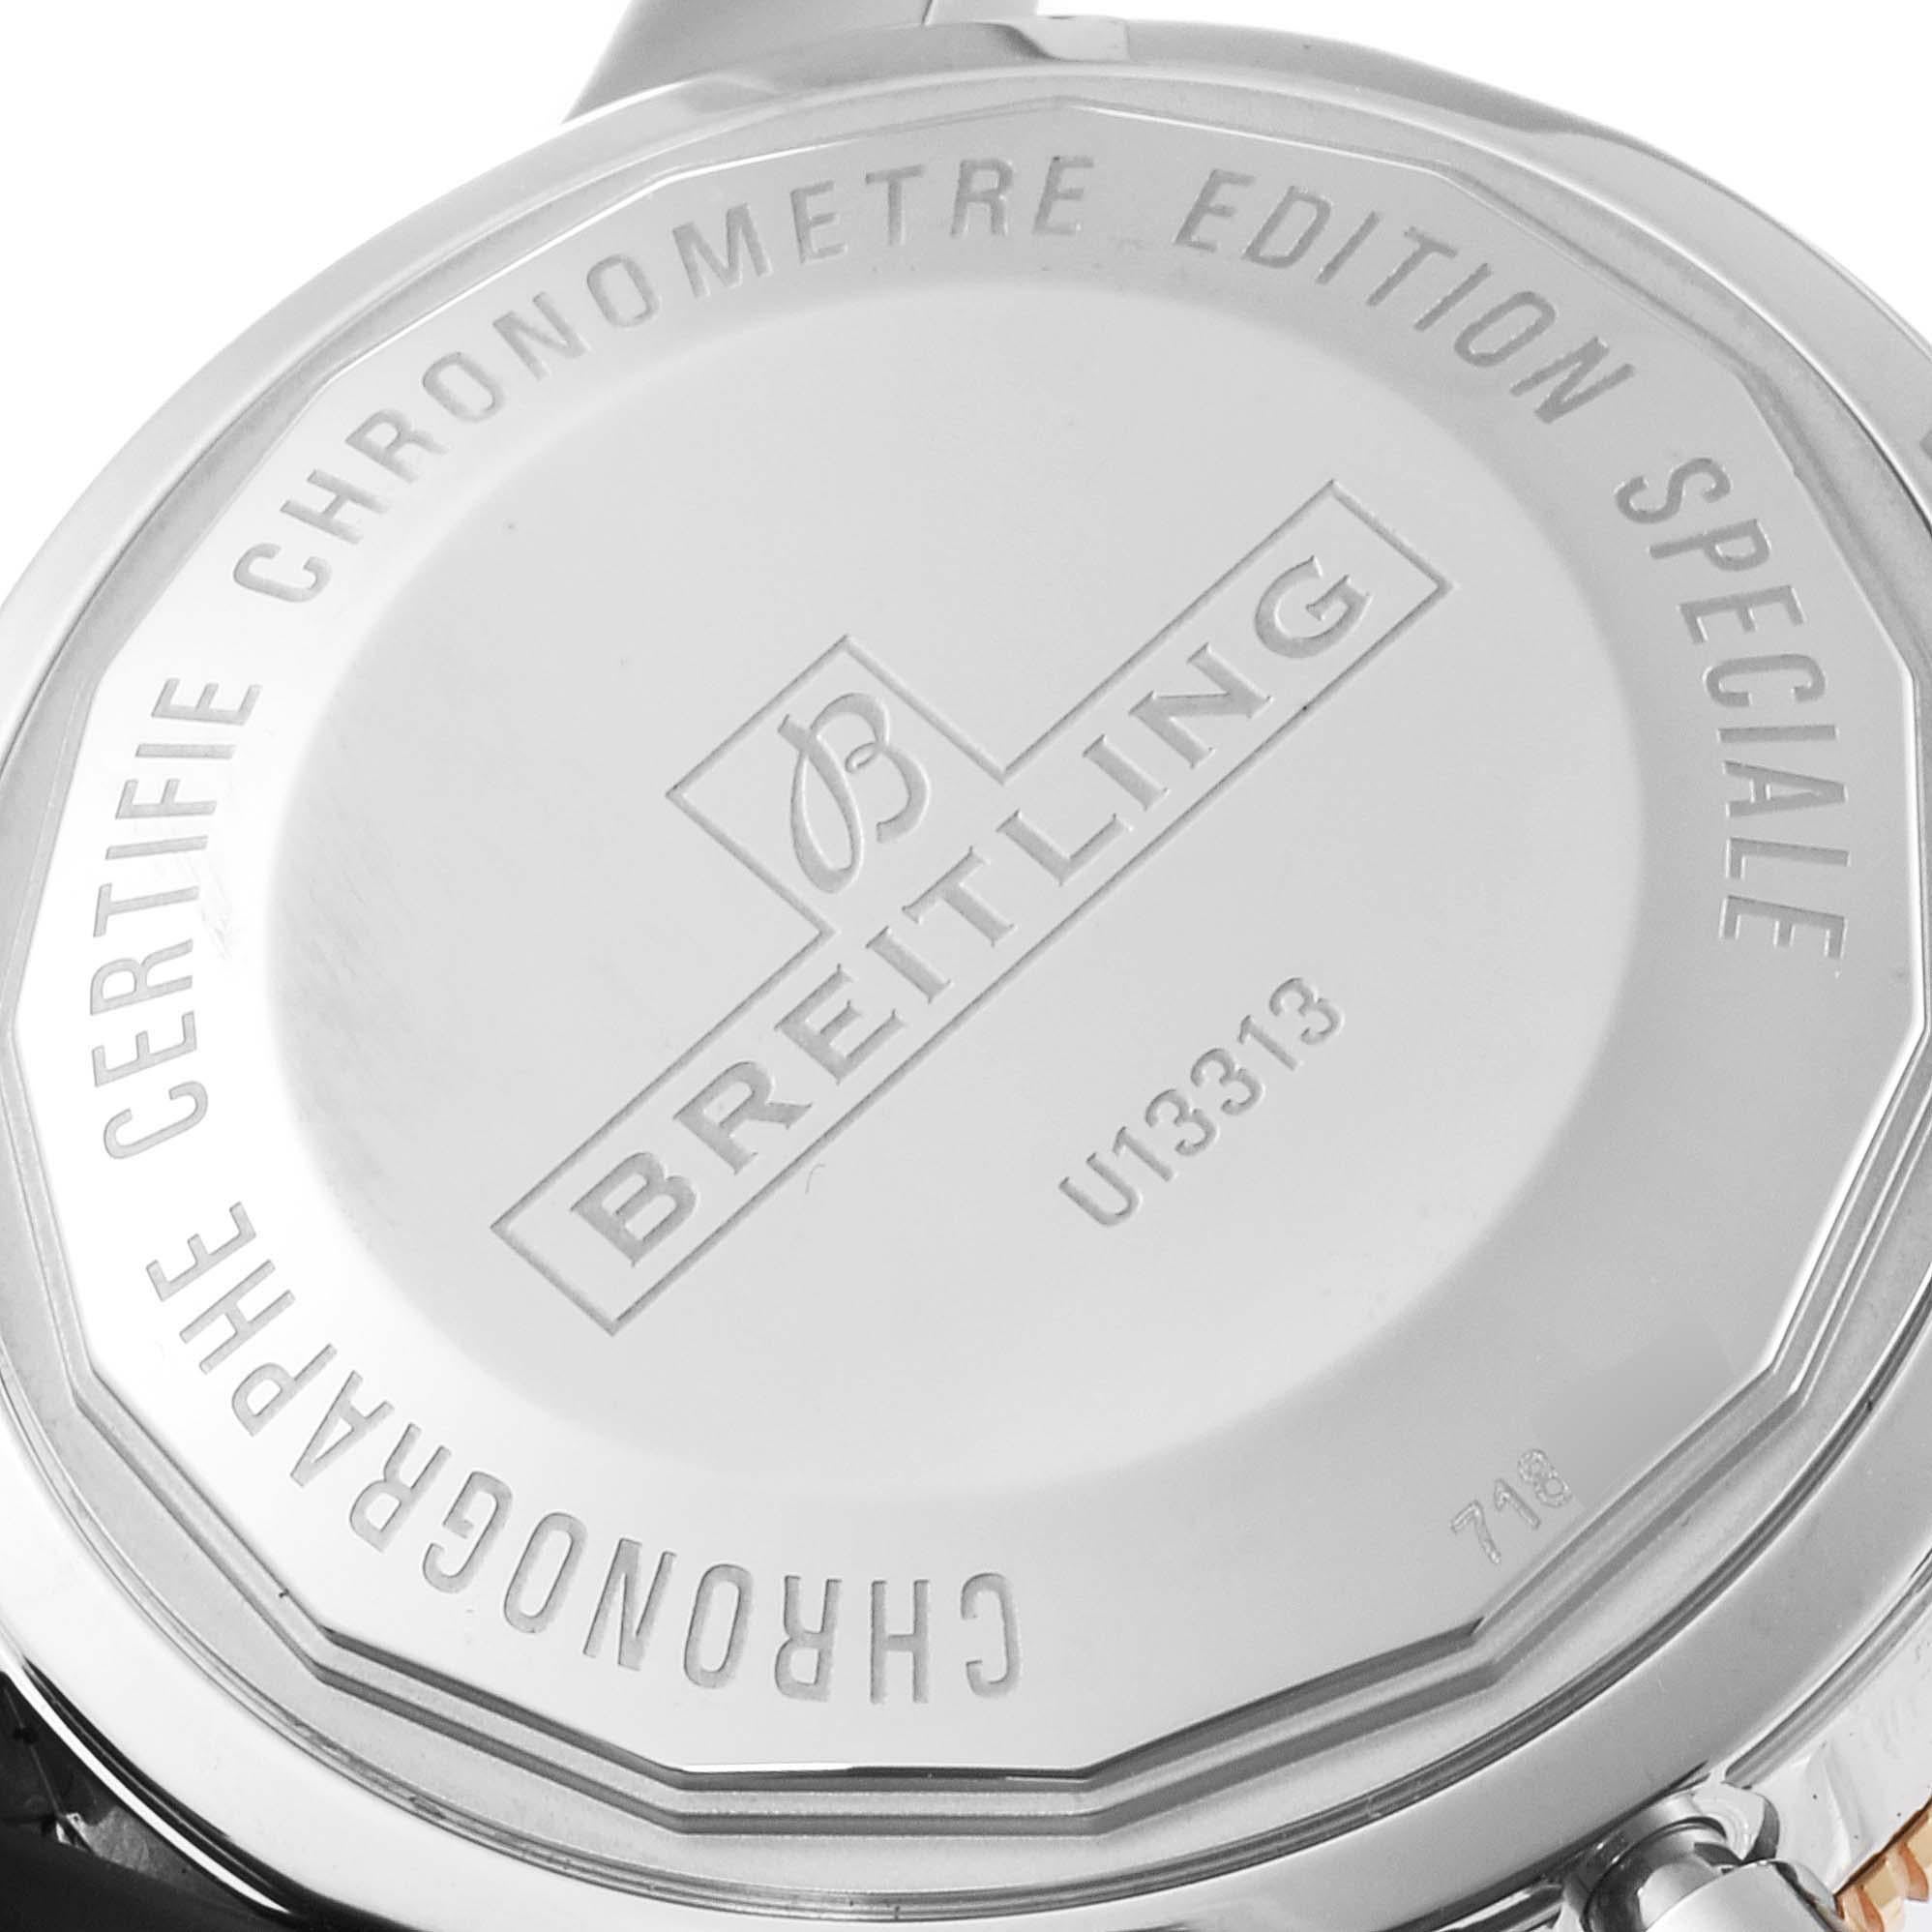 Breitling Superocean Heritage II Steel Rose Gold Watch U13313 Box Card For Sale 3